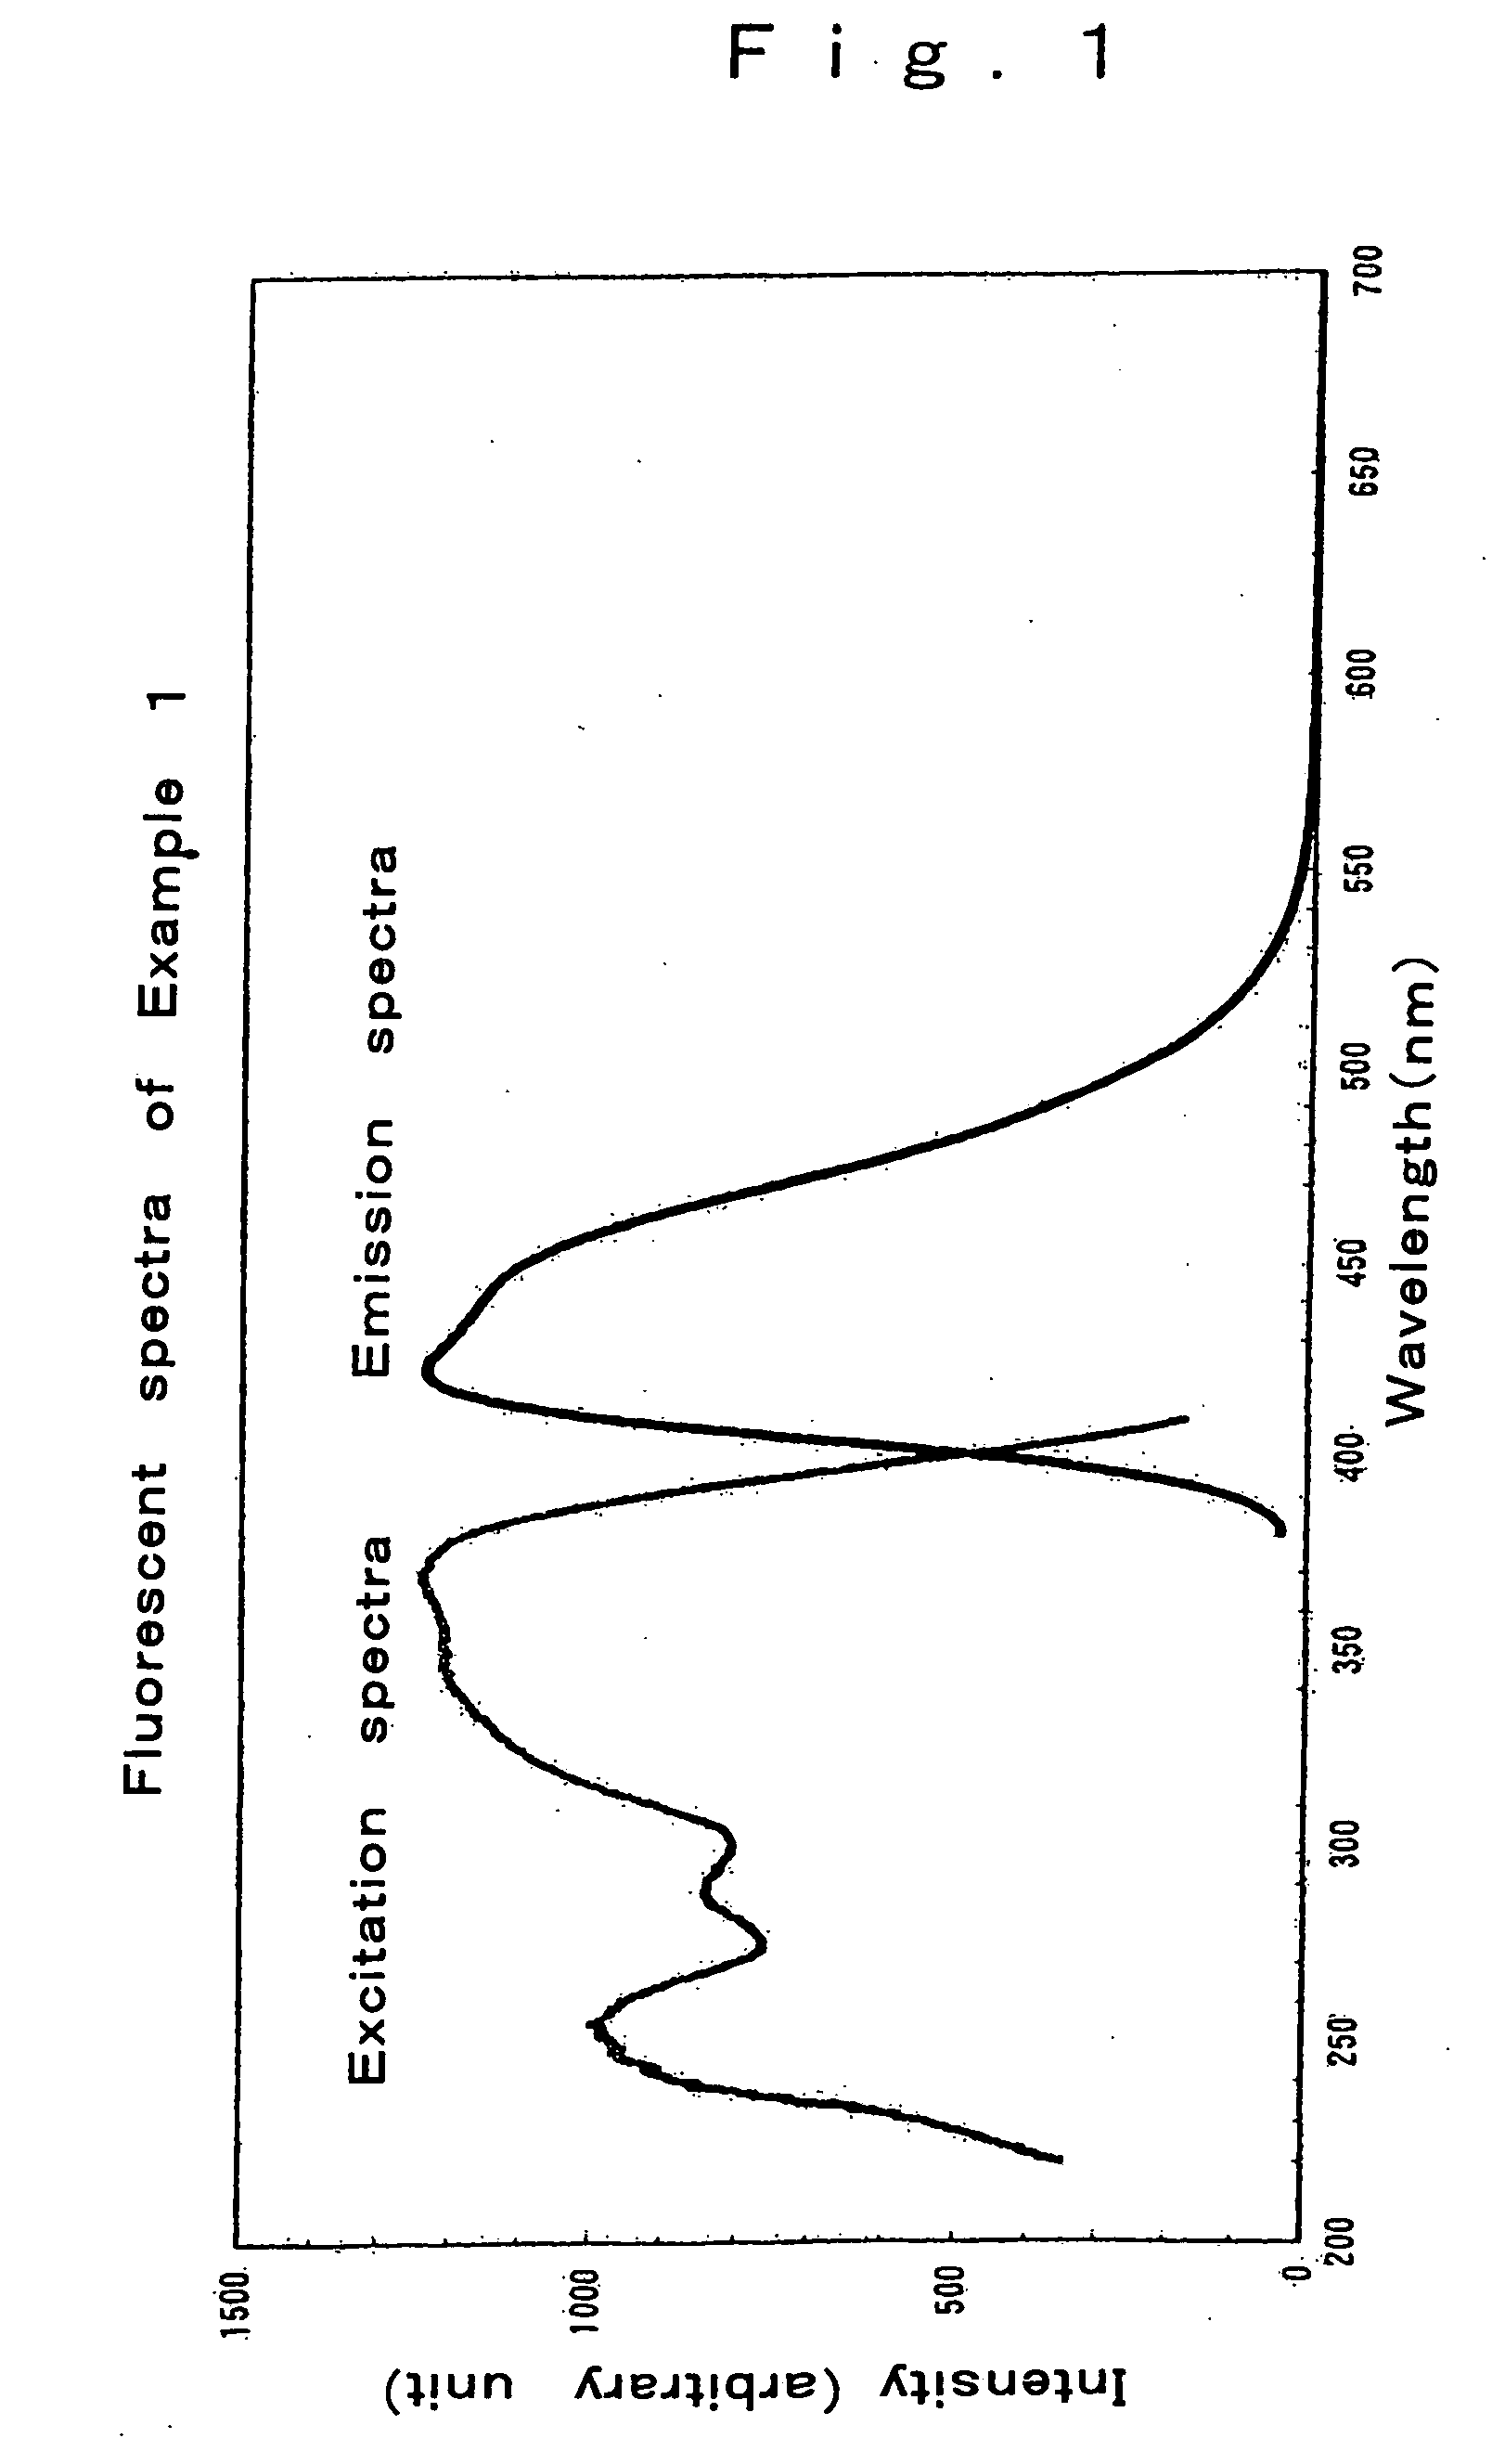 Oxynitride phosphor and light-emitting device